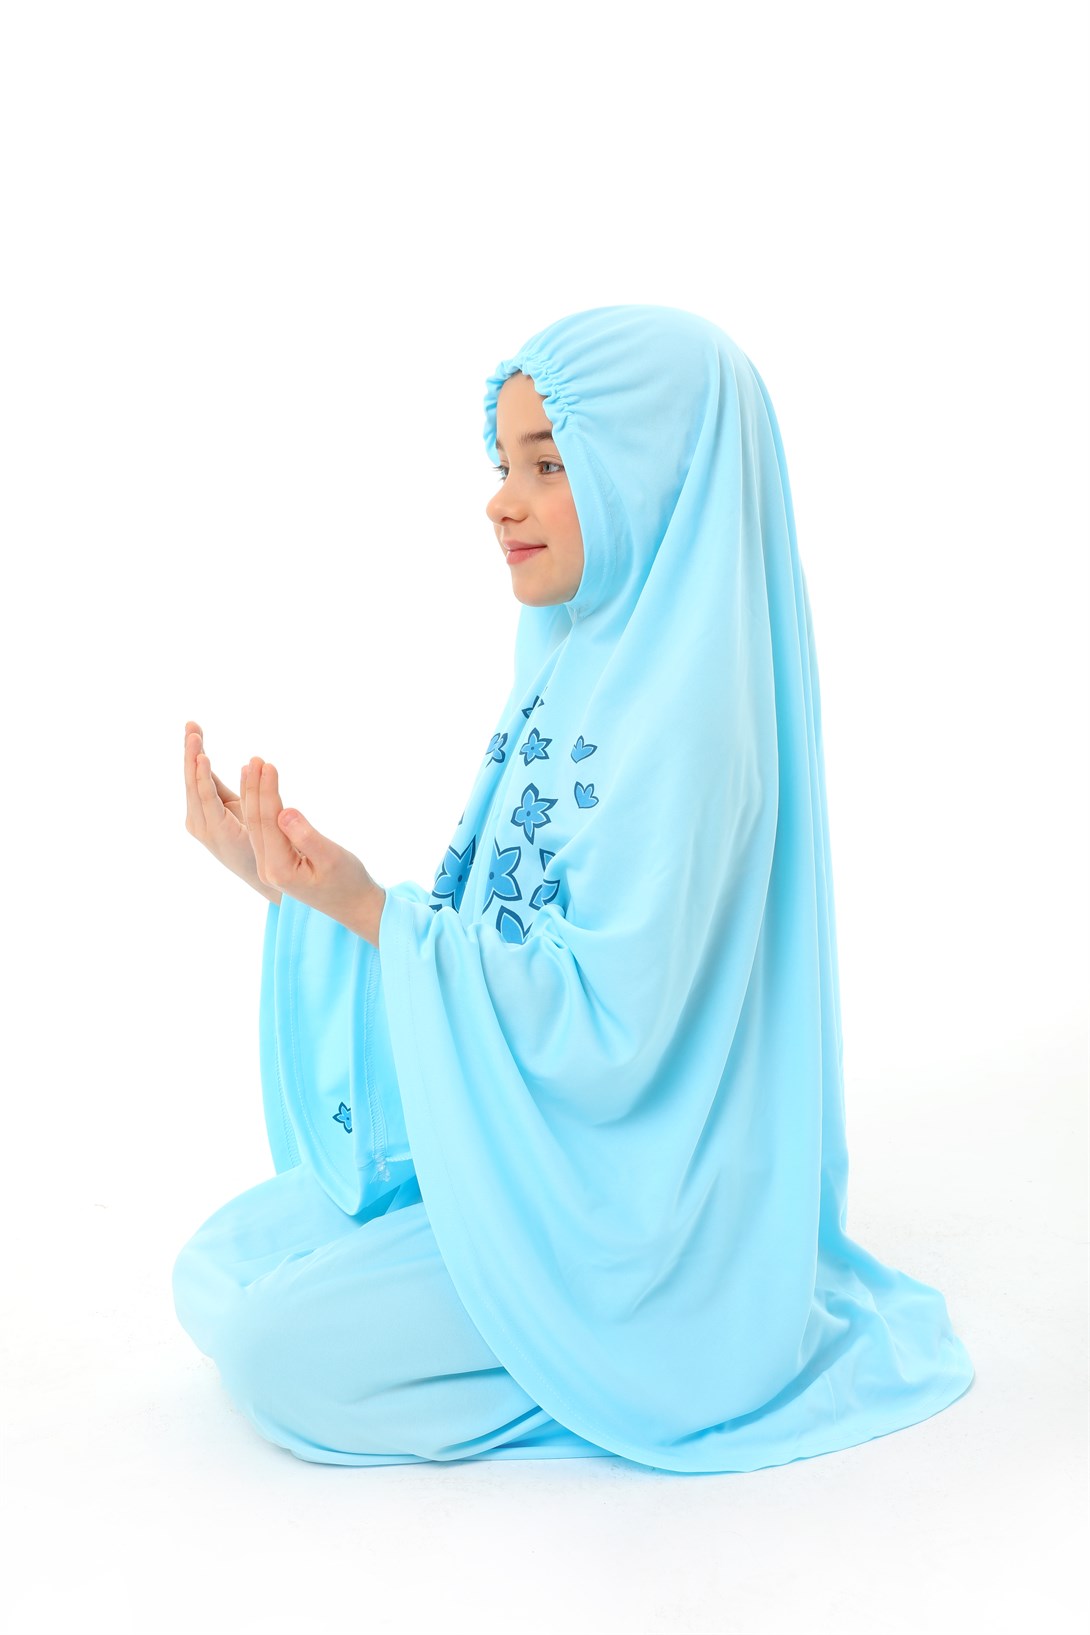 Girl's Prayer Dress Star Printed Long Headscarf